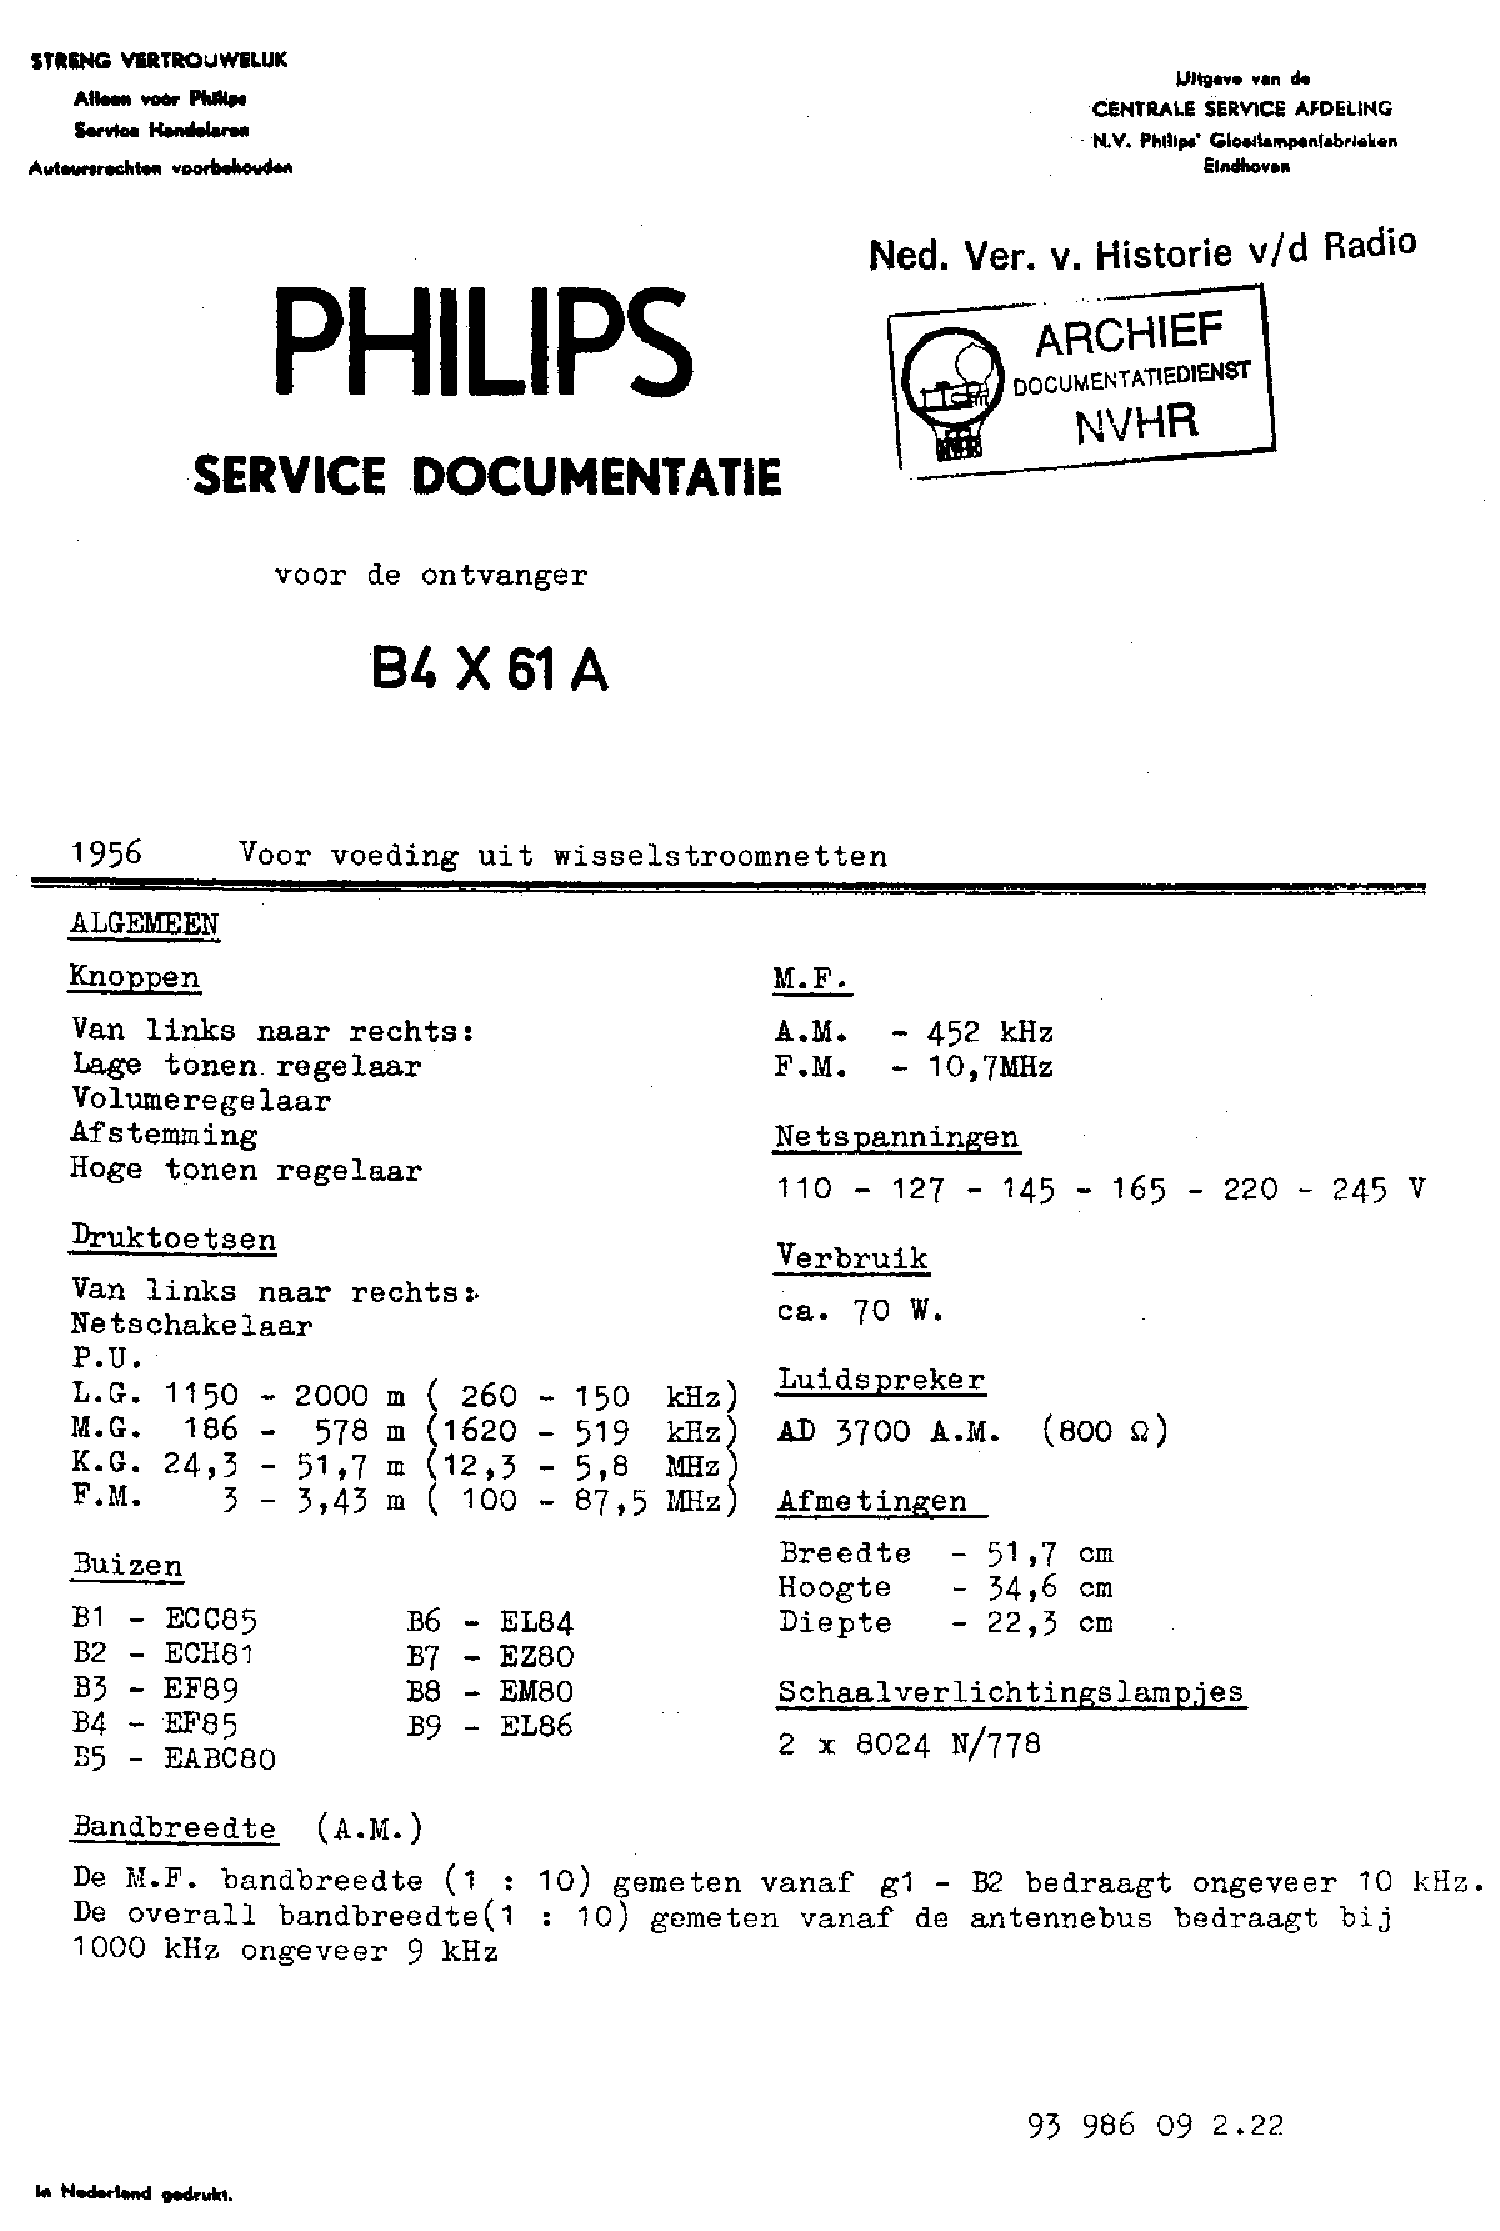 PHILIPS B4X61A AM-FM AC SUPER RECEIVER 1956 SM service manual (1st page)